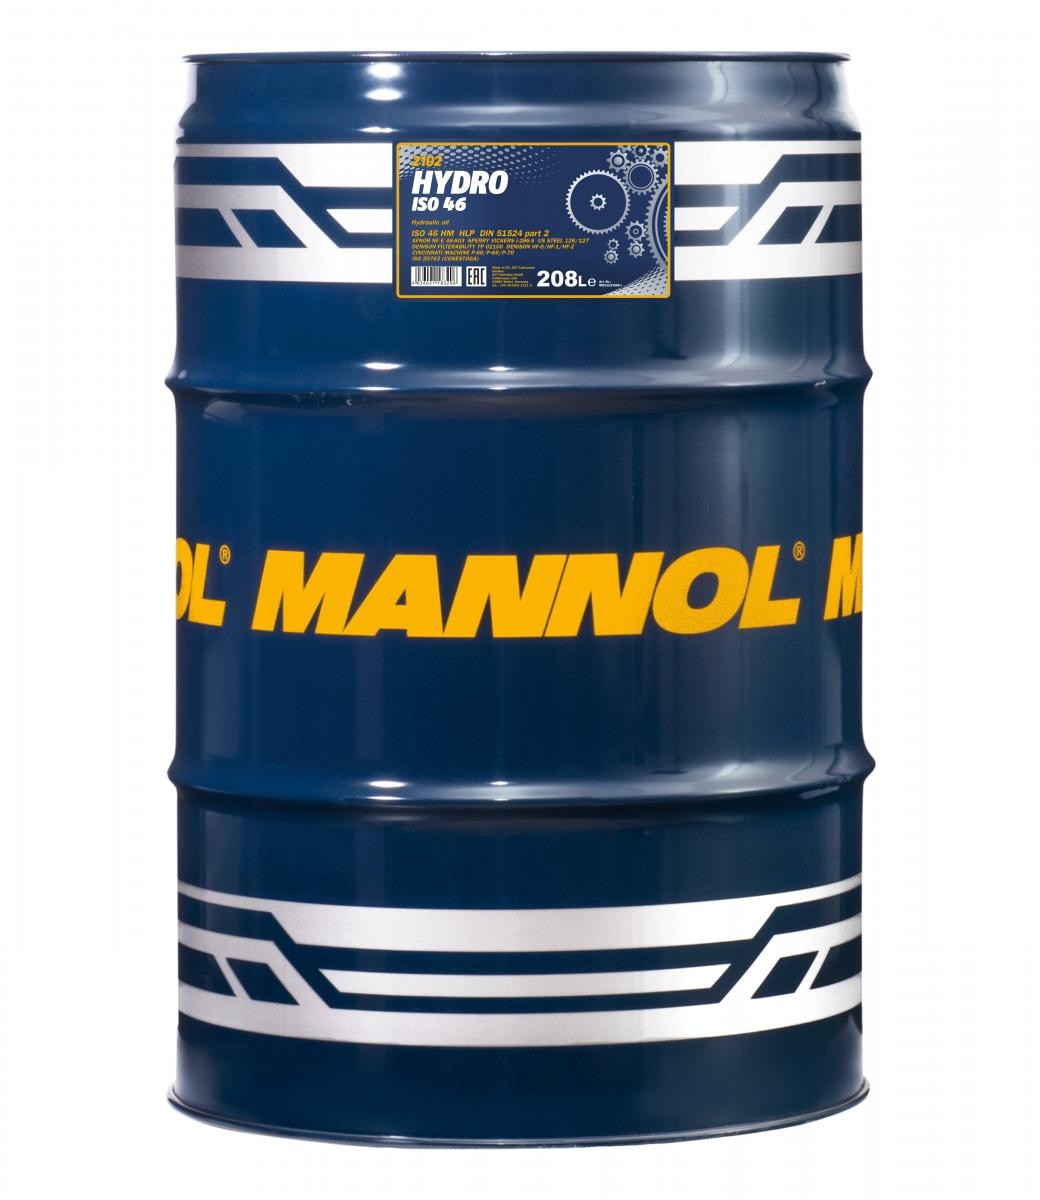 Mannol 2102 Hydro ISO 46 Hydrauliköl 208 Liter